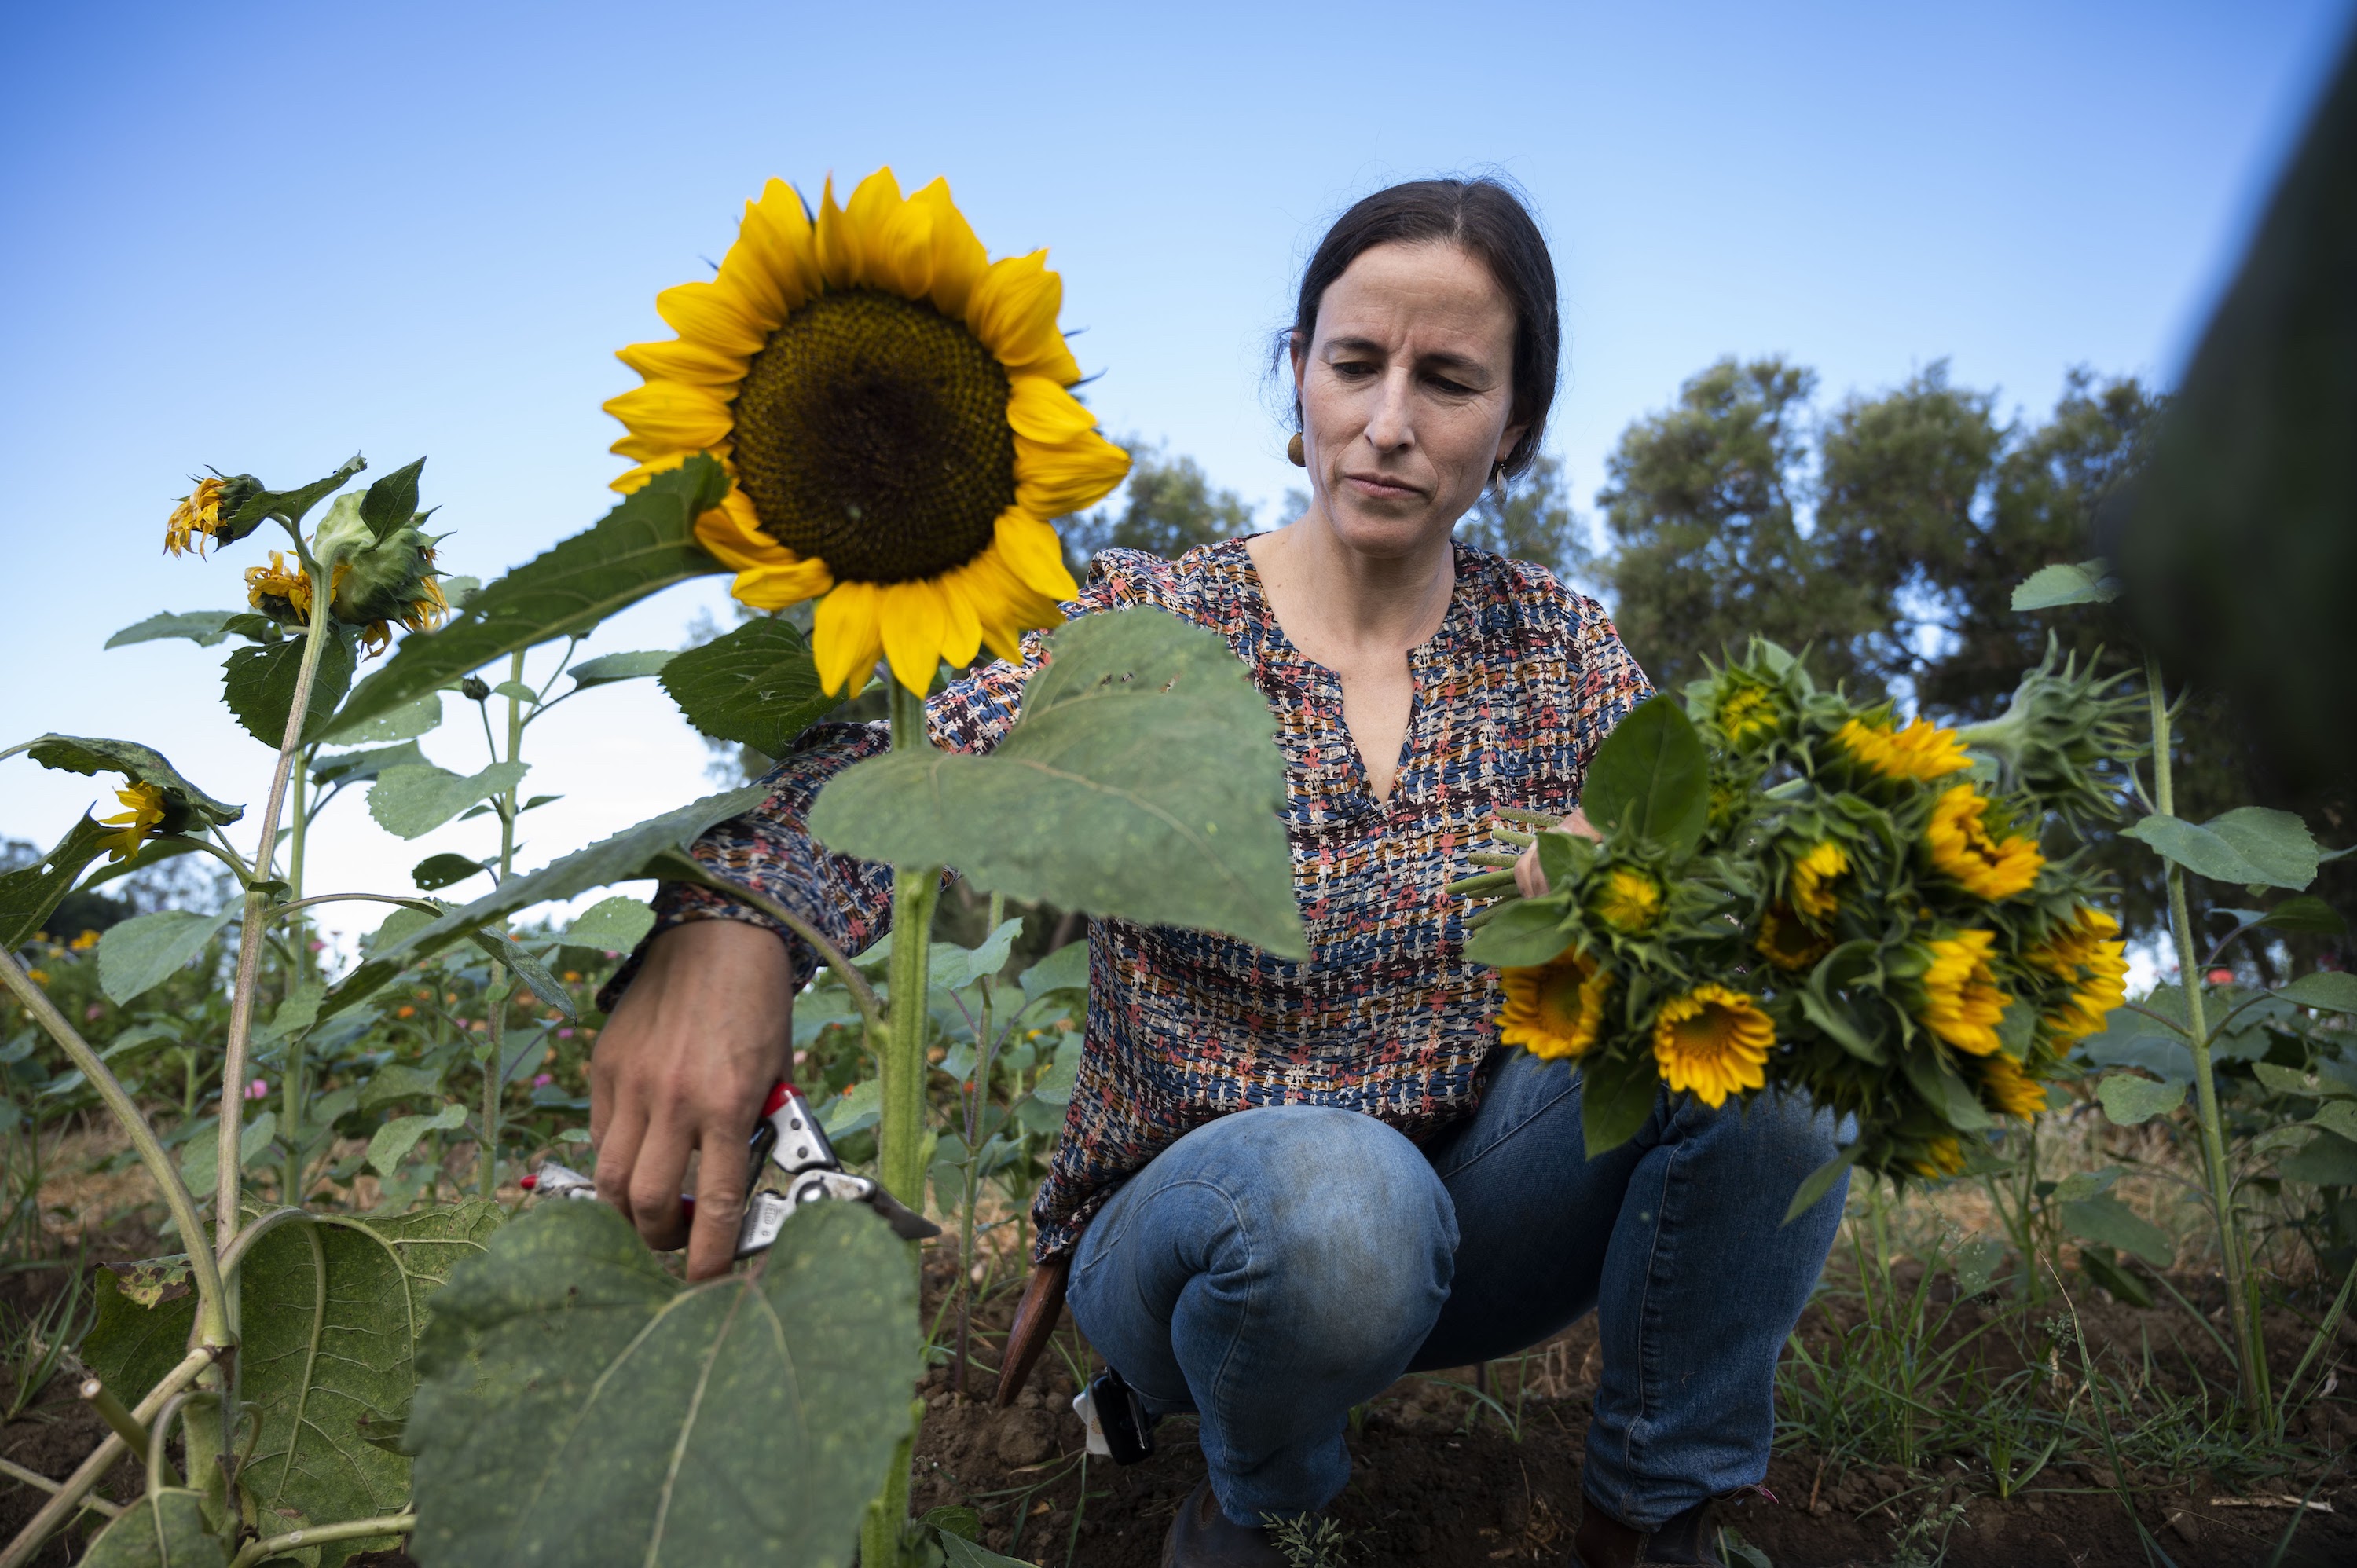 Julia Schreiber picks sunflowers in a garden